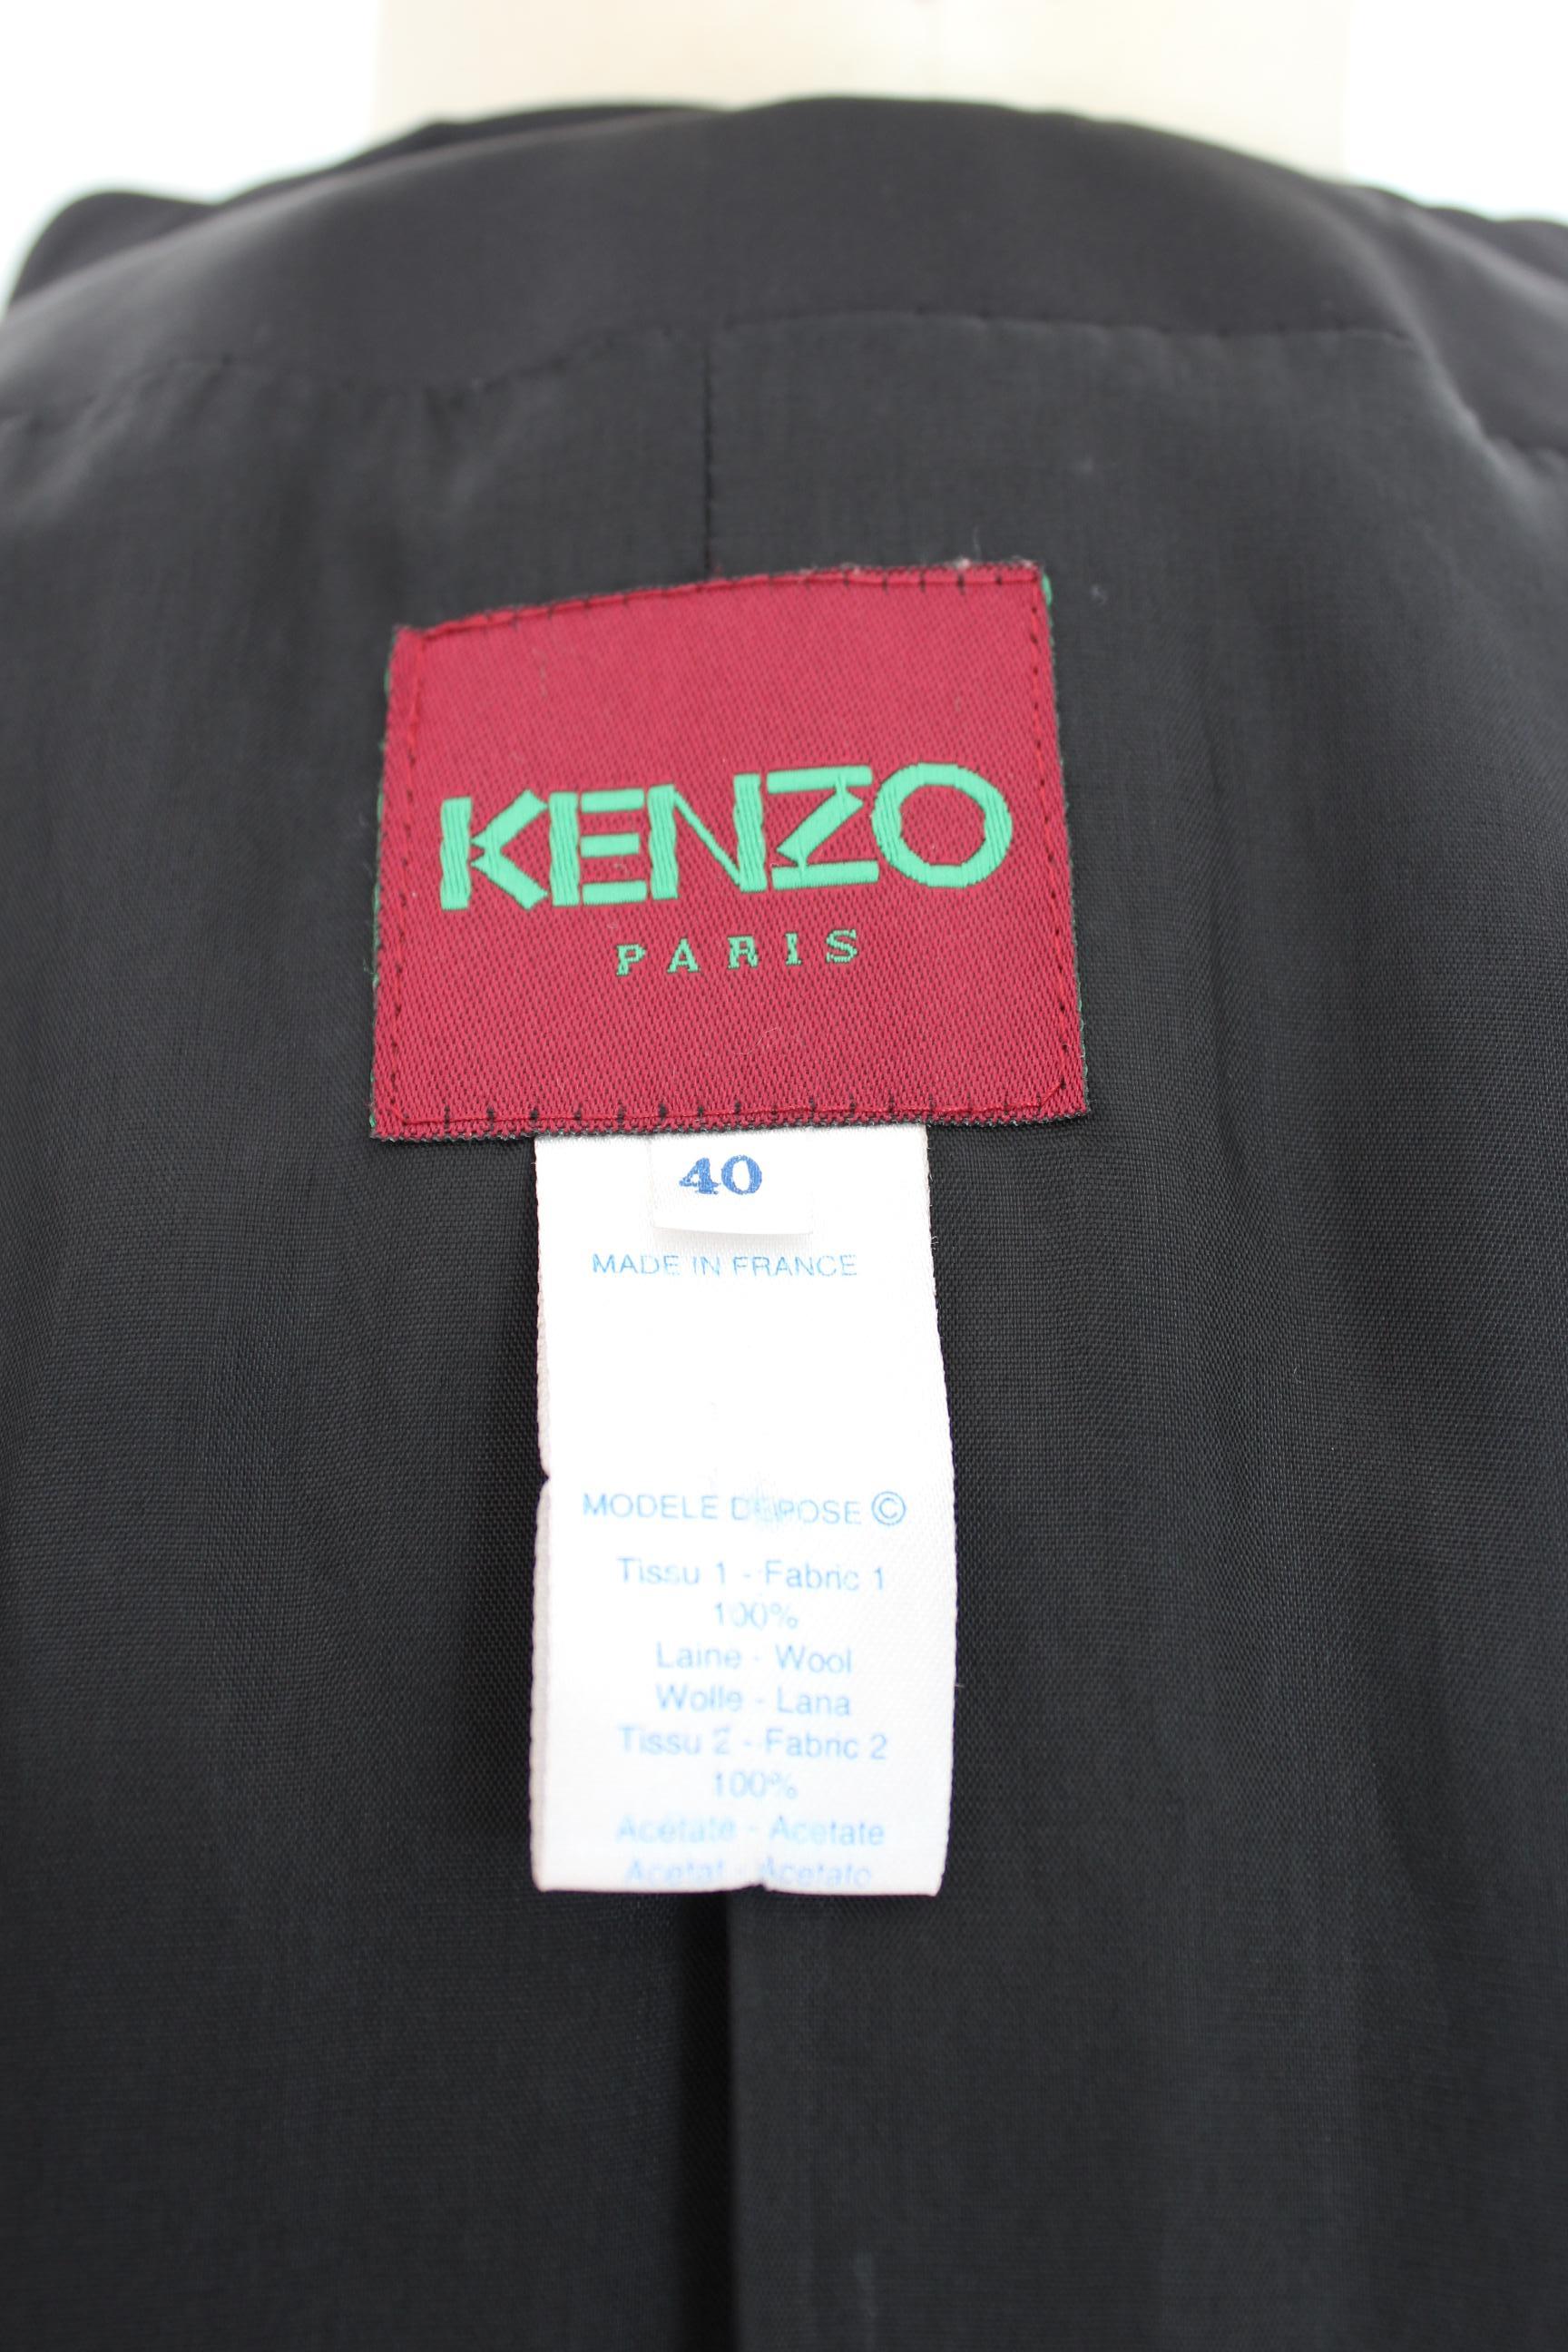 Kenzo Paris Black Wool Long Jacket Coat 1990s Shinny Lapel One Button 2